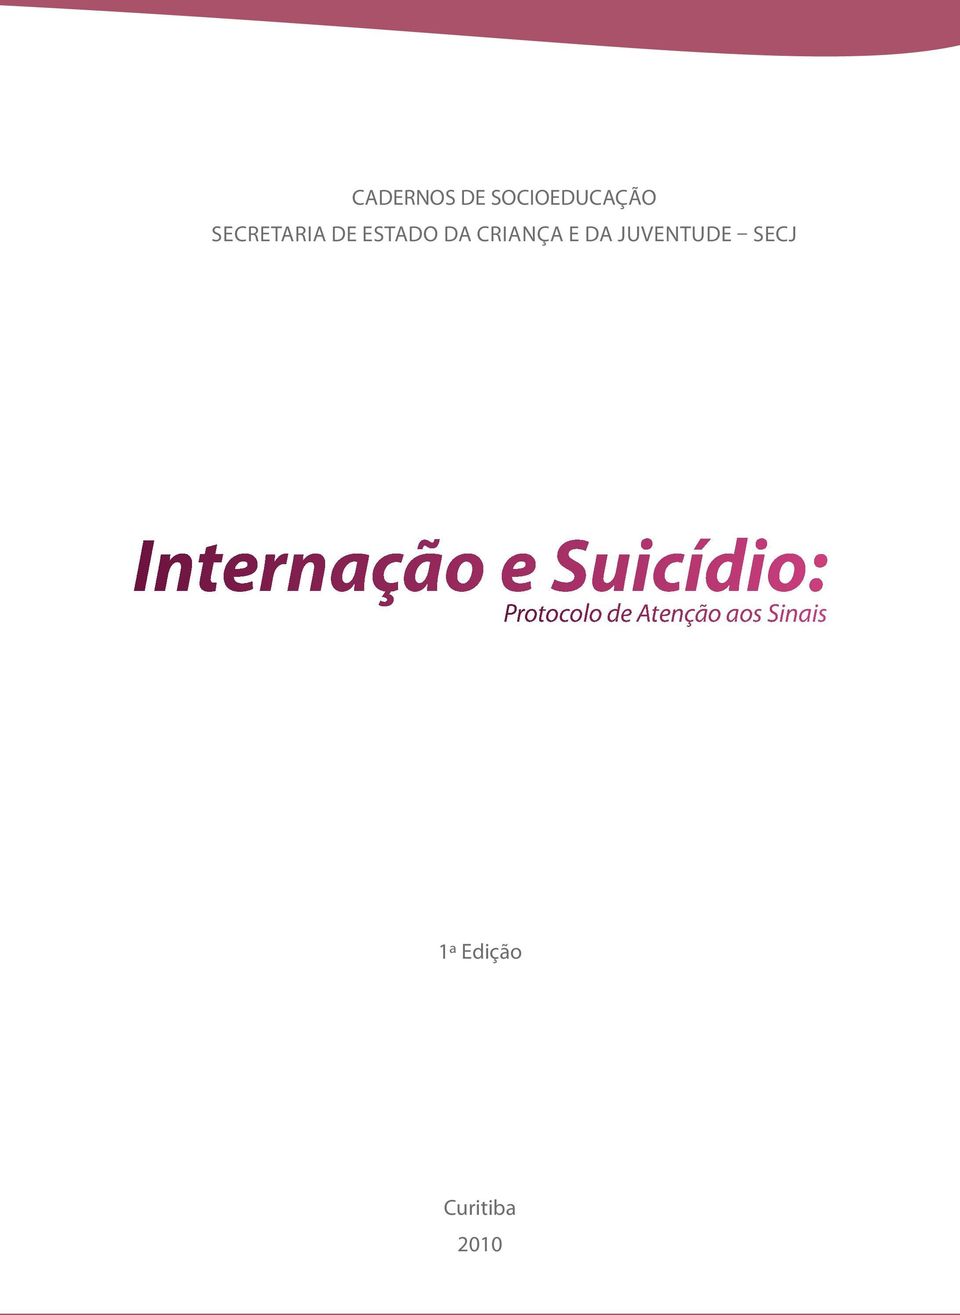 SECJ Internação e Suicídio: Protocolo